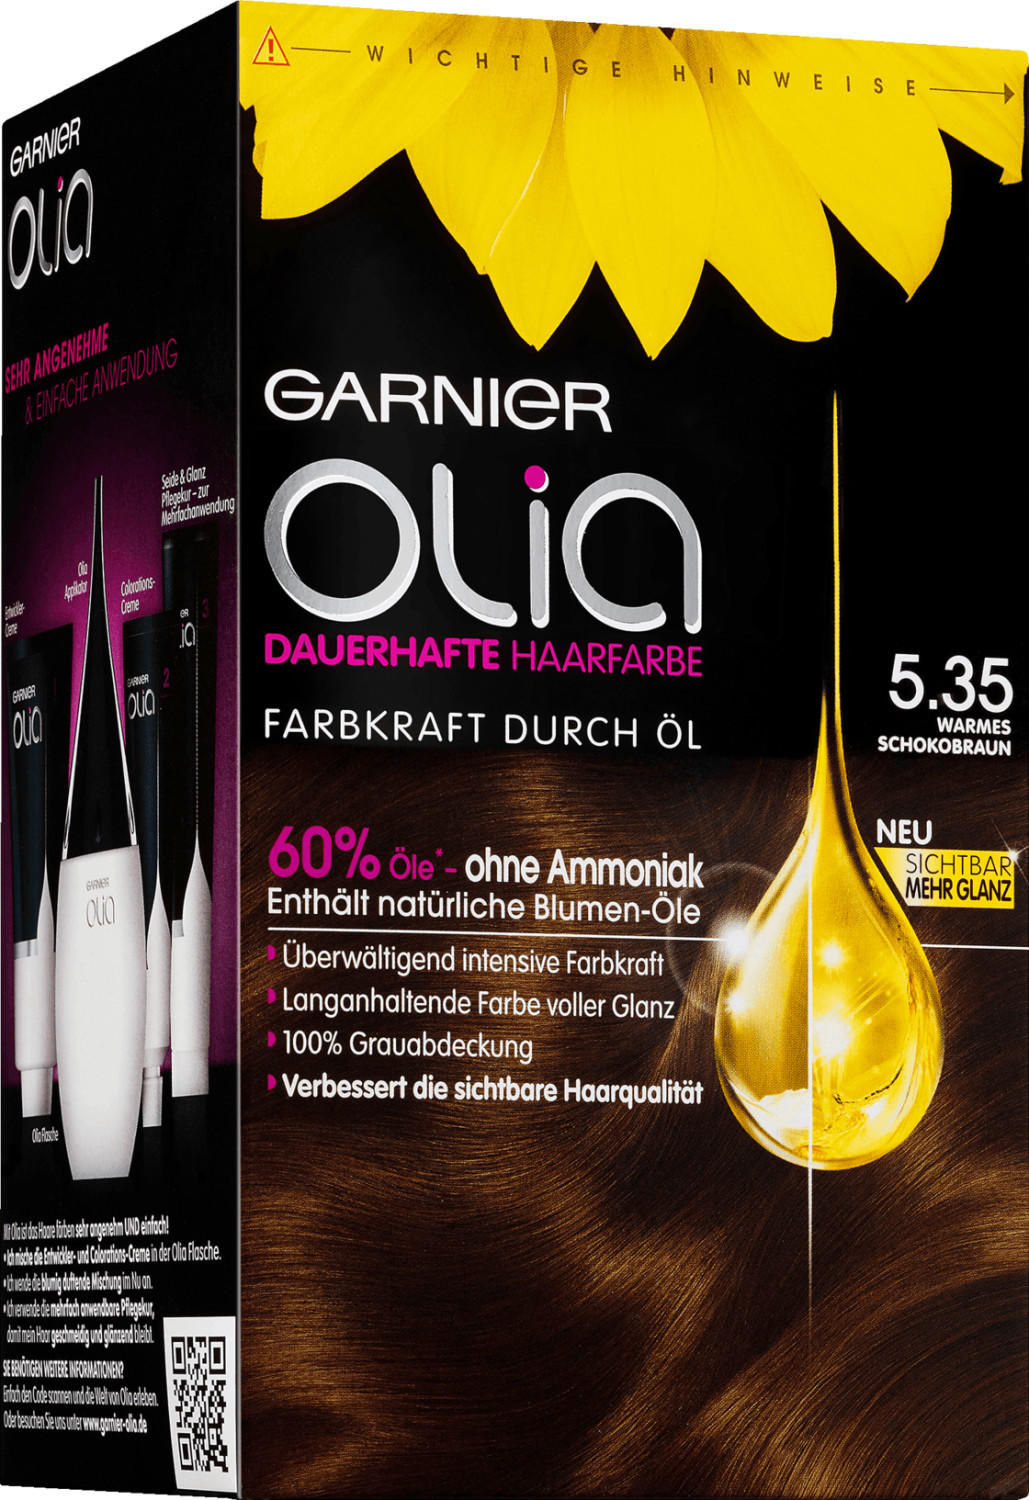 6,74 Warmes Schokobraun Angebote - ab Olia 5.35 Garnier €